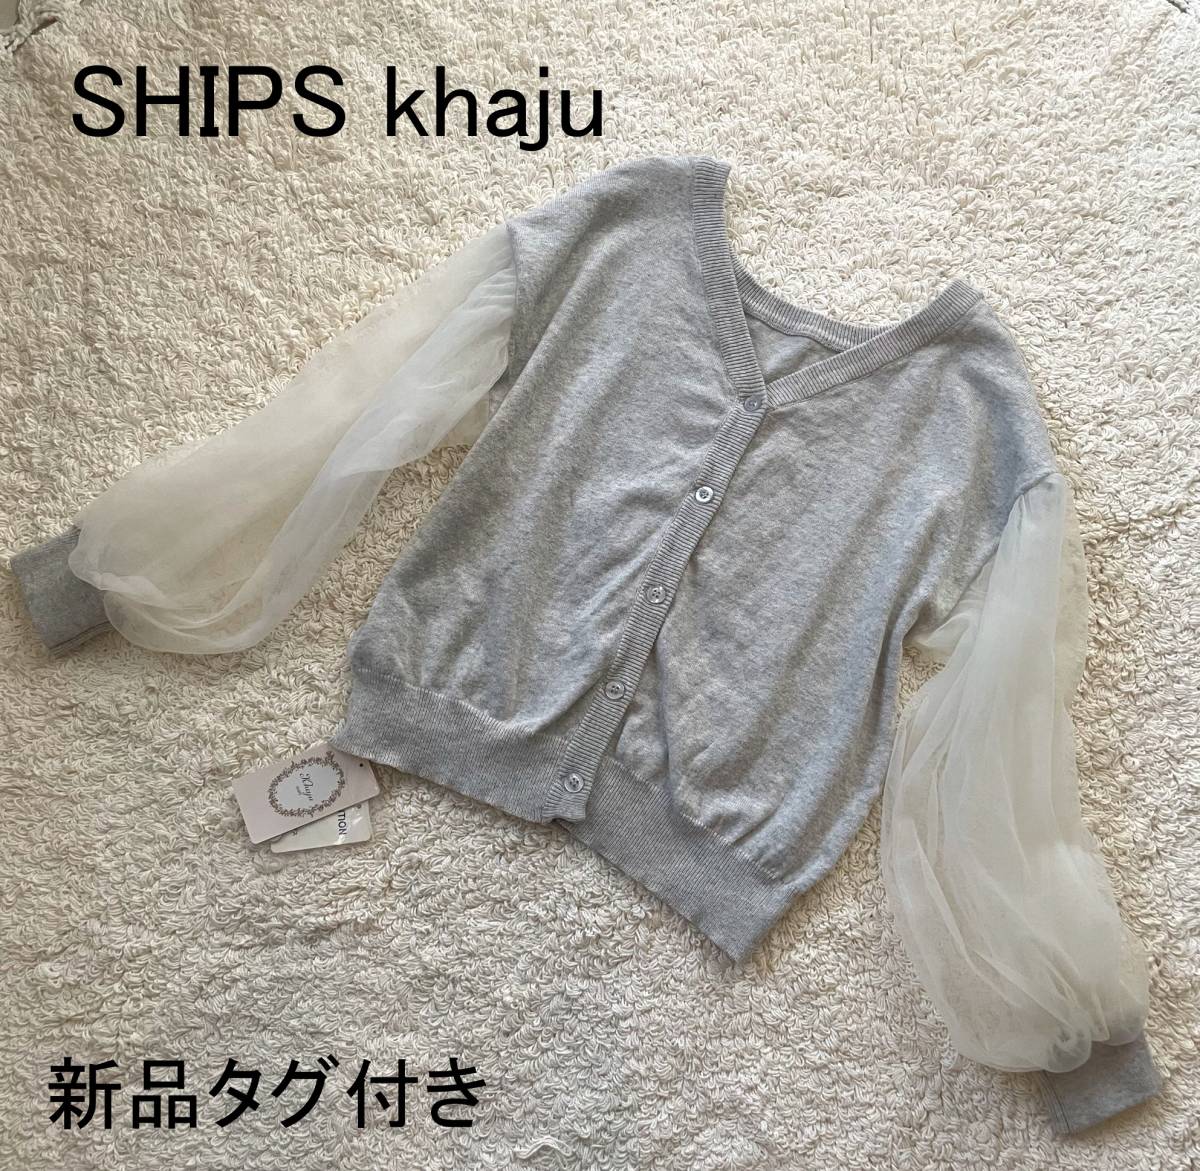  tag equipped Ships SHIPS khaju car ju chiffon sleeve cardigan light gray free size 